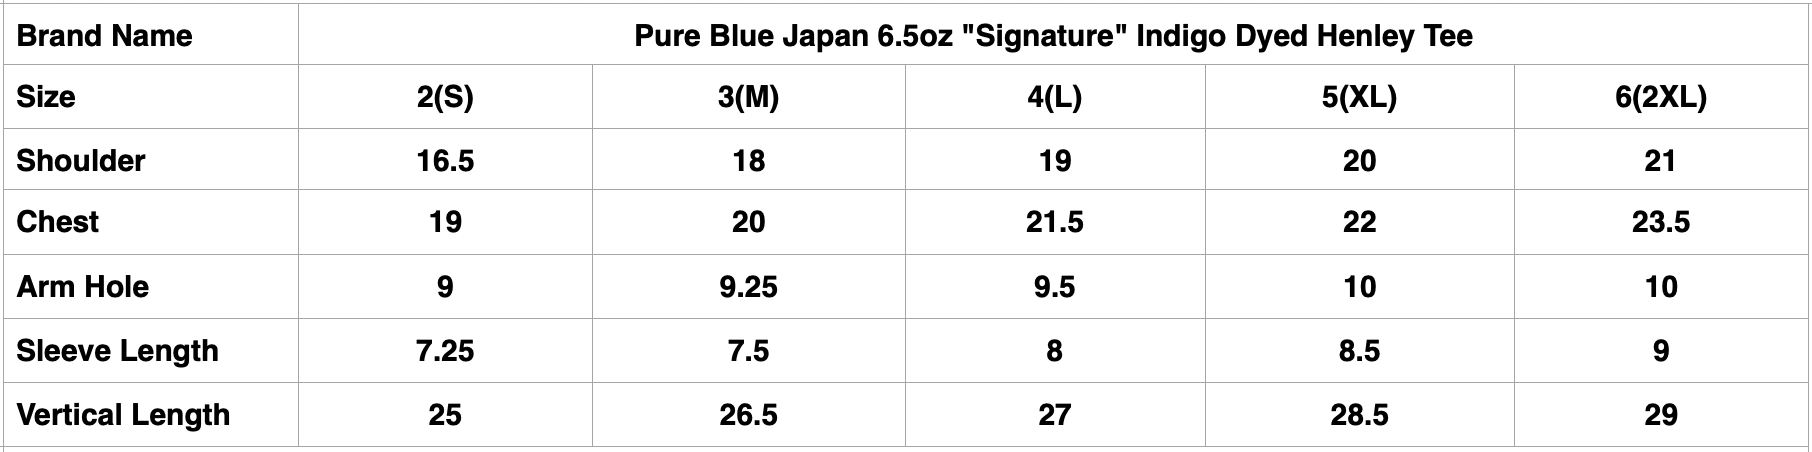 Pure Blue Japan 6.5oz "Signature" Indigo Dyed Henley Tee (Grand Indigo)